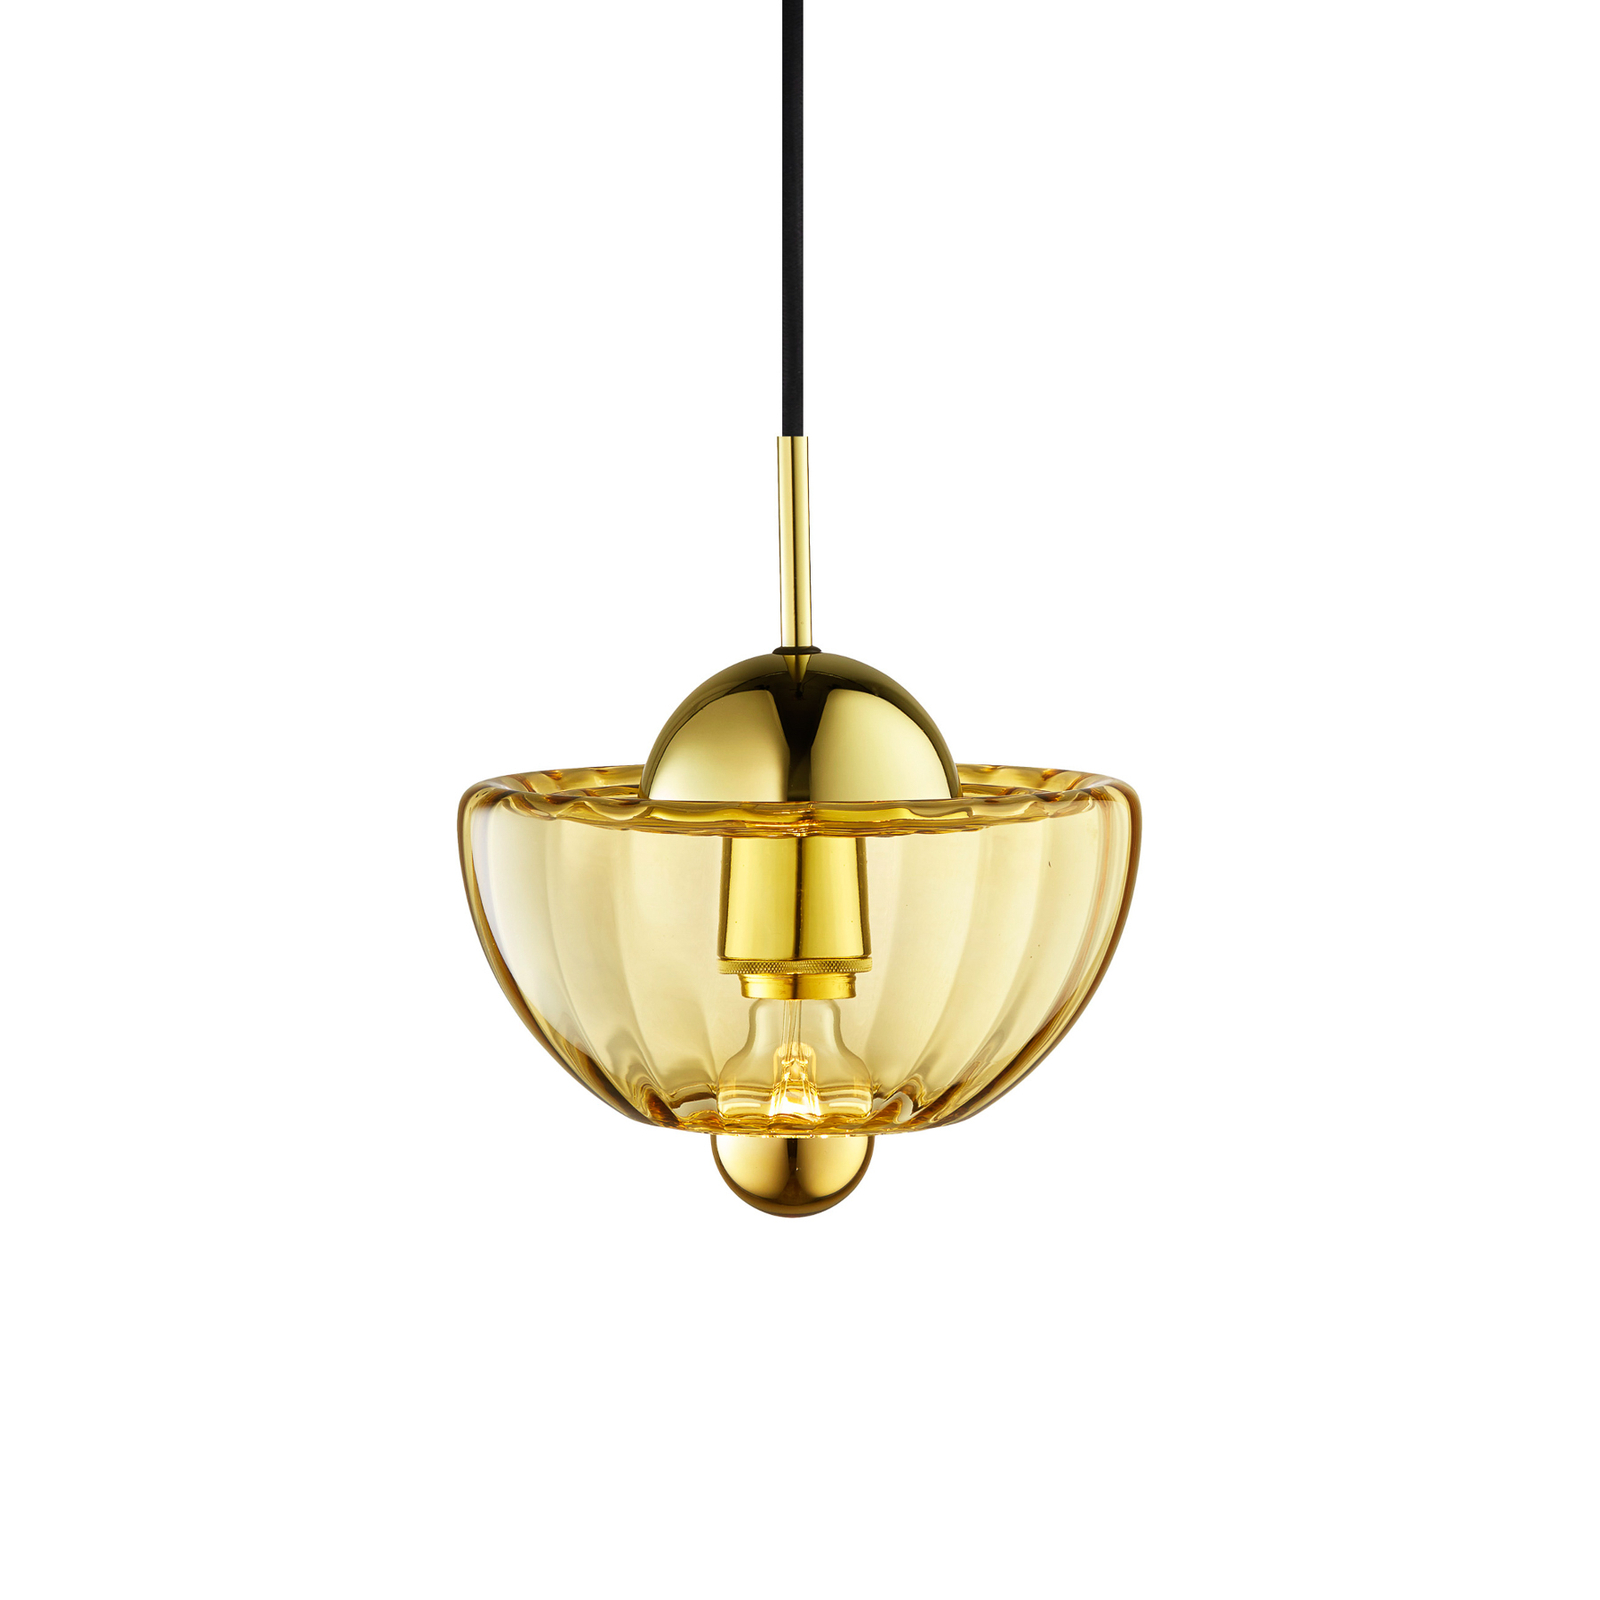 Závěsná lampa Lotus, jantarová, Ø 25 cm, sklo, foukané do úst